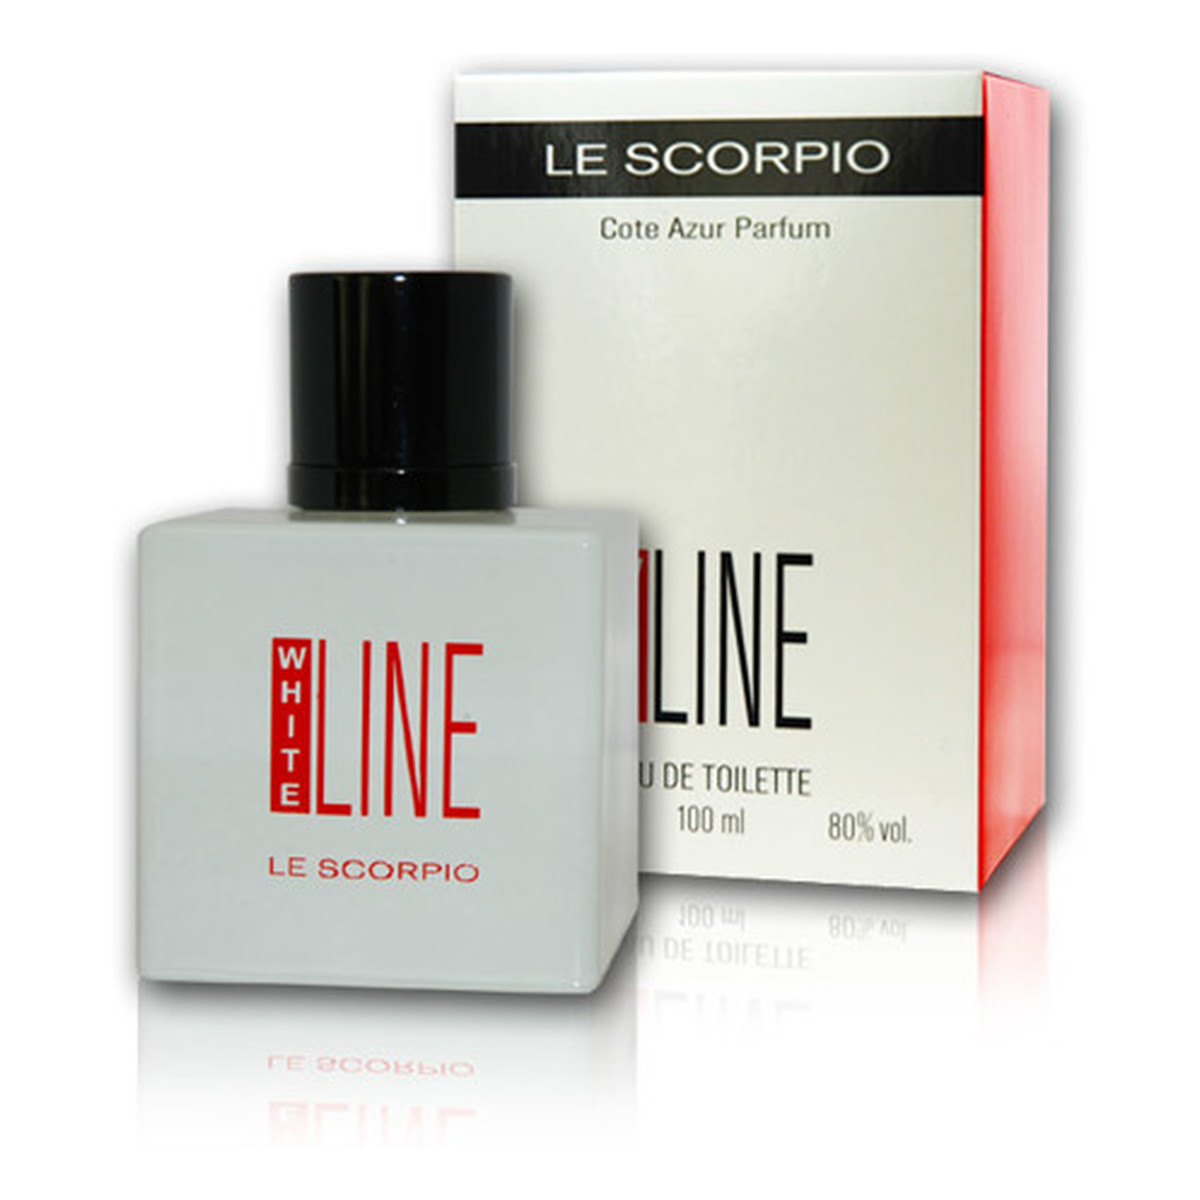 Cote D'Azure Le Scorpio White Line woda toaletowa 100ml